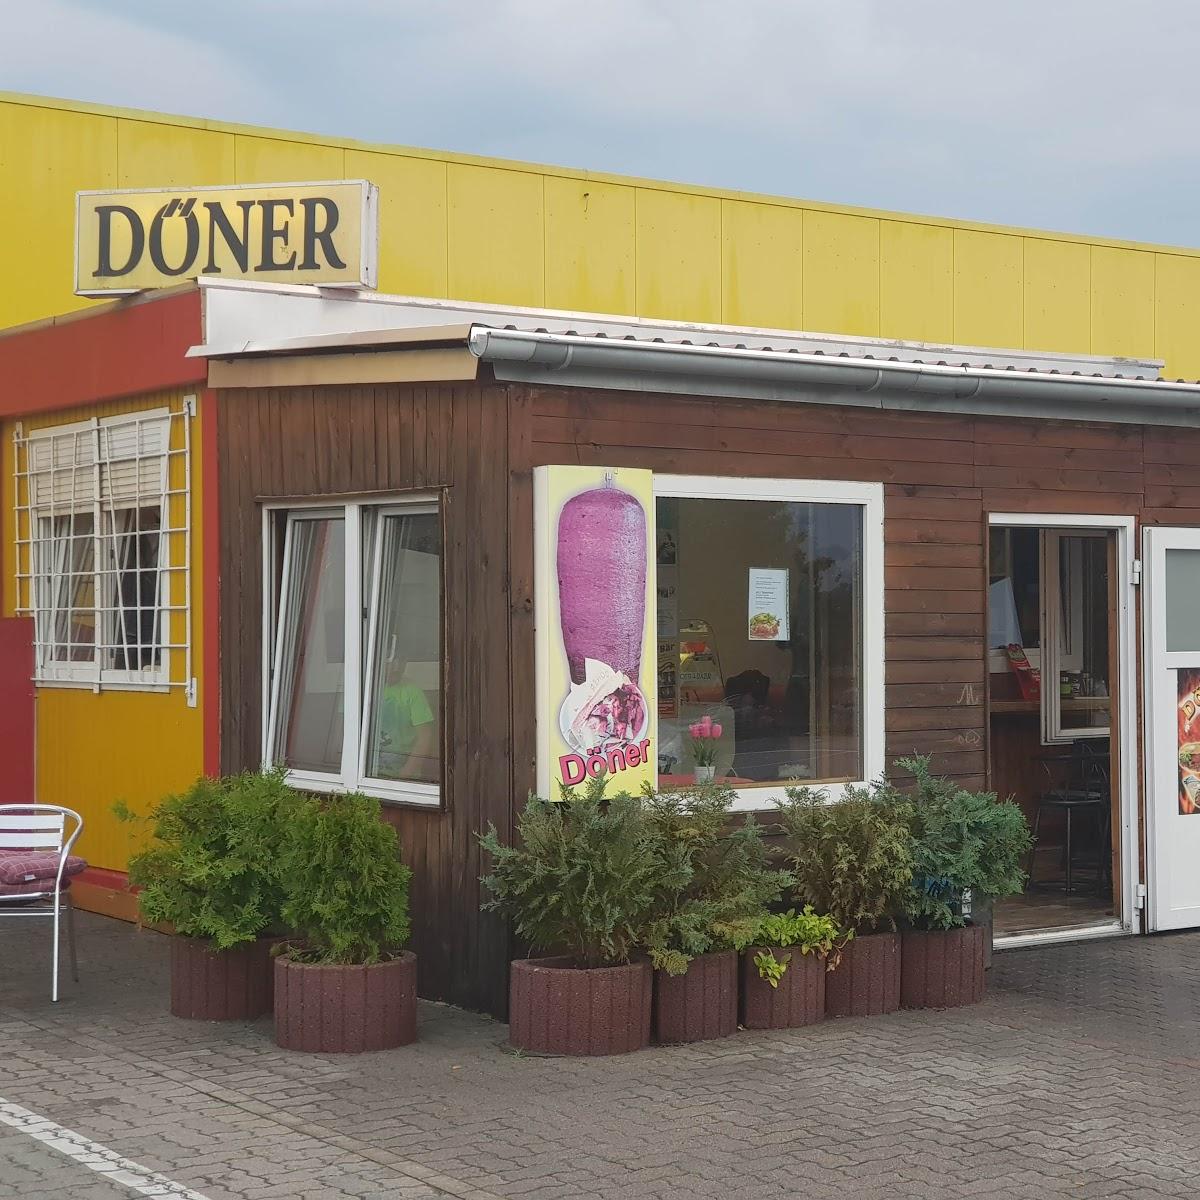 Restaurant "Döner Imbiss" in Demmin